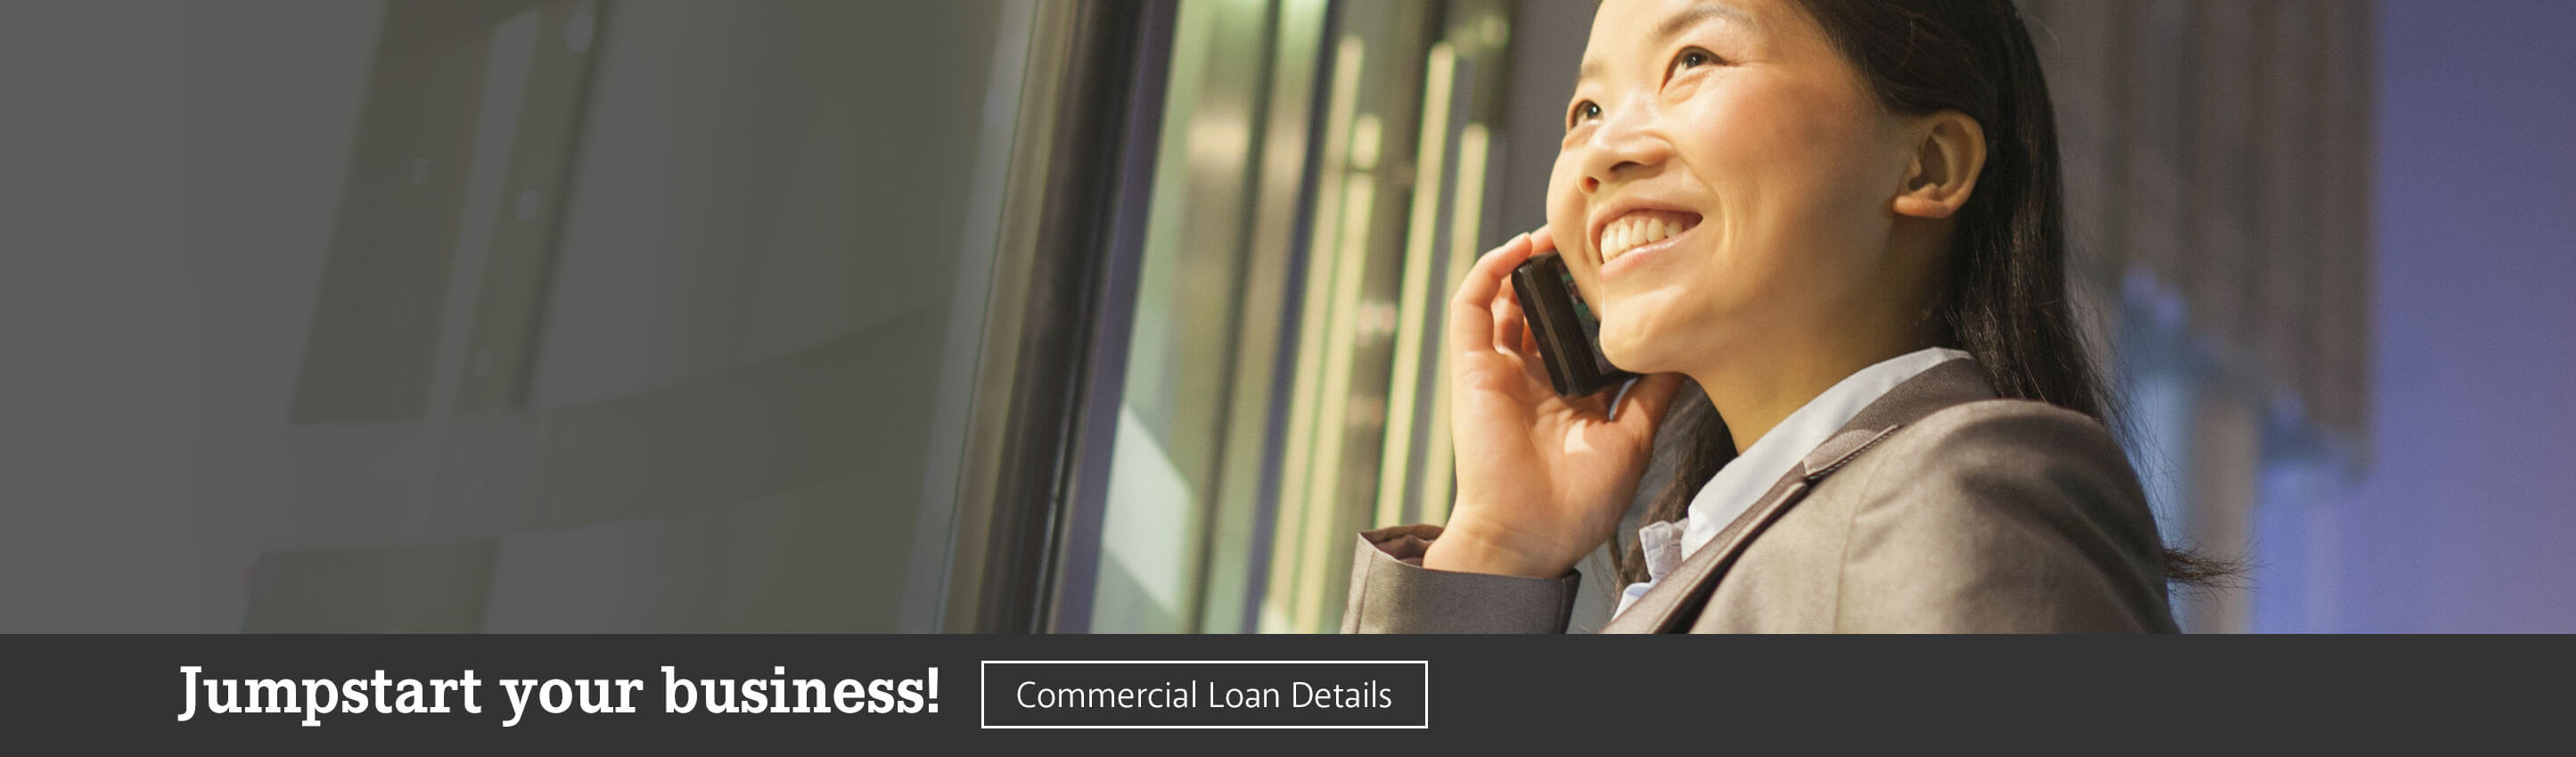 Jumpstart your business! Commercial Loan Details